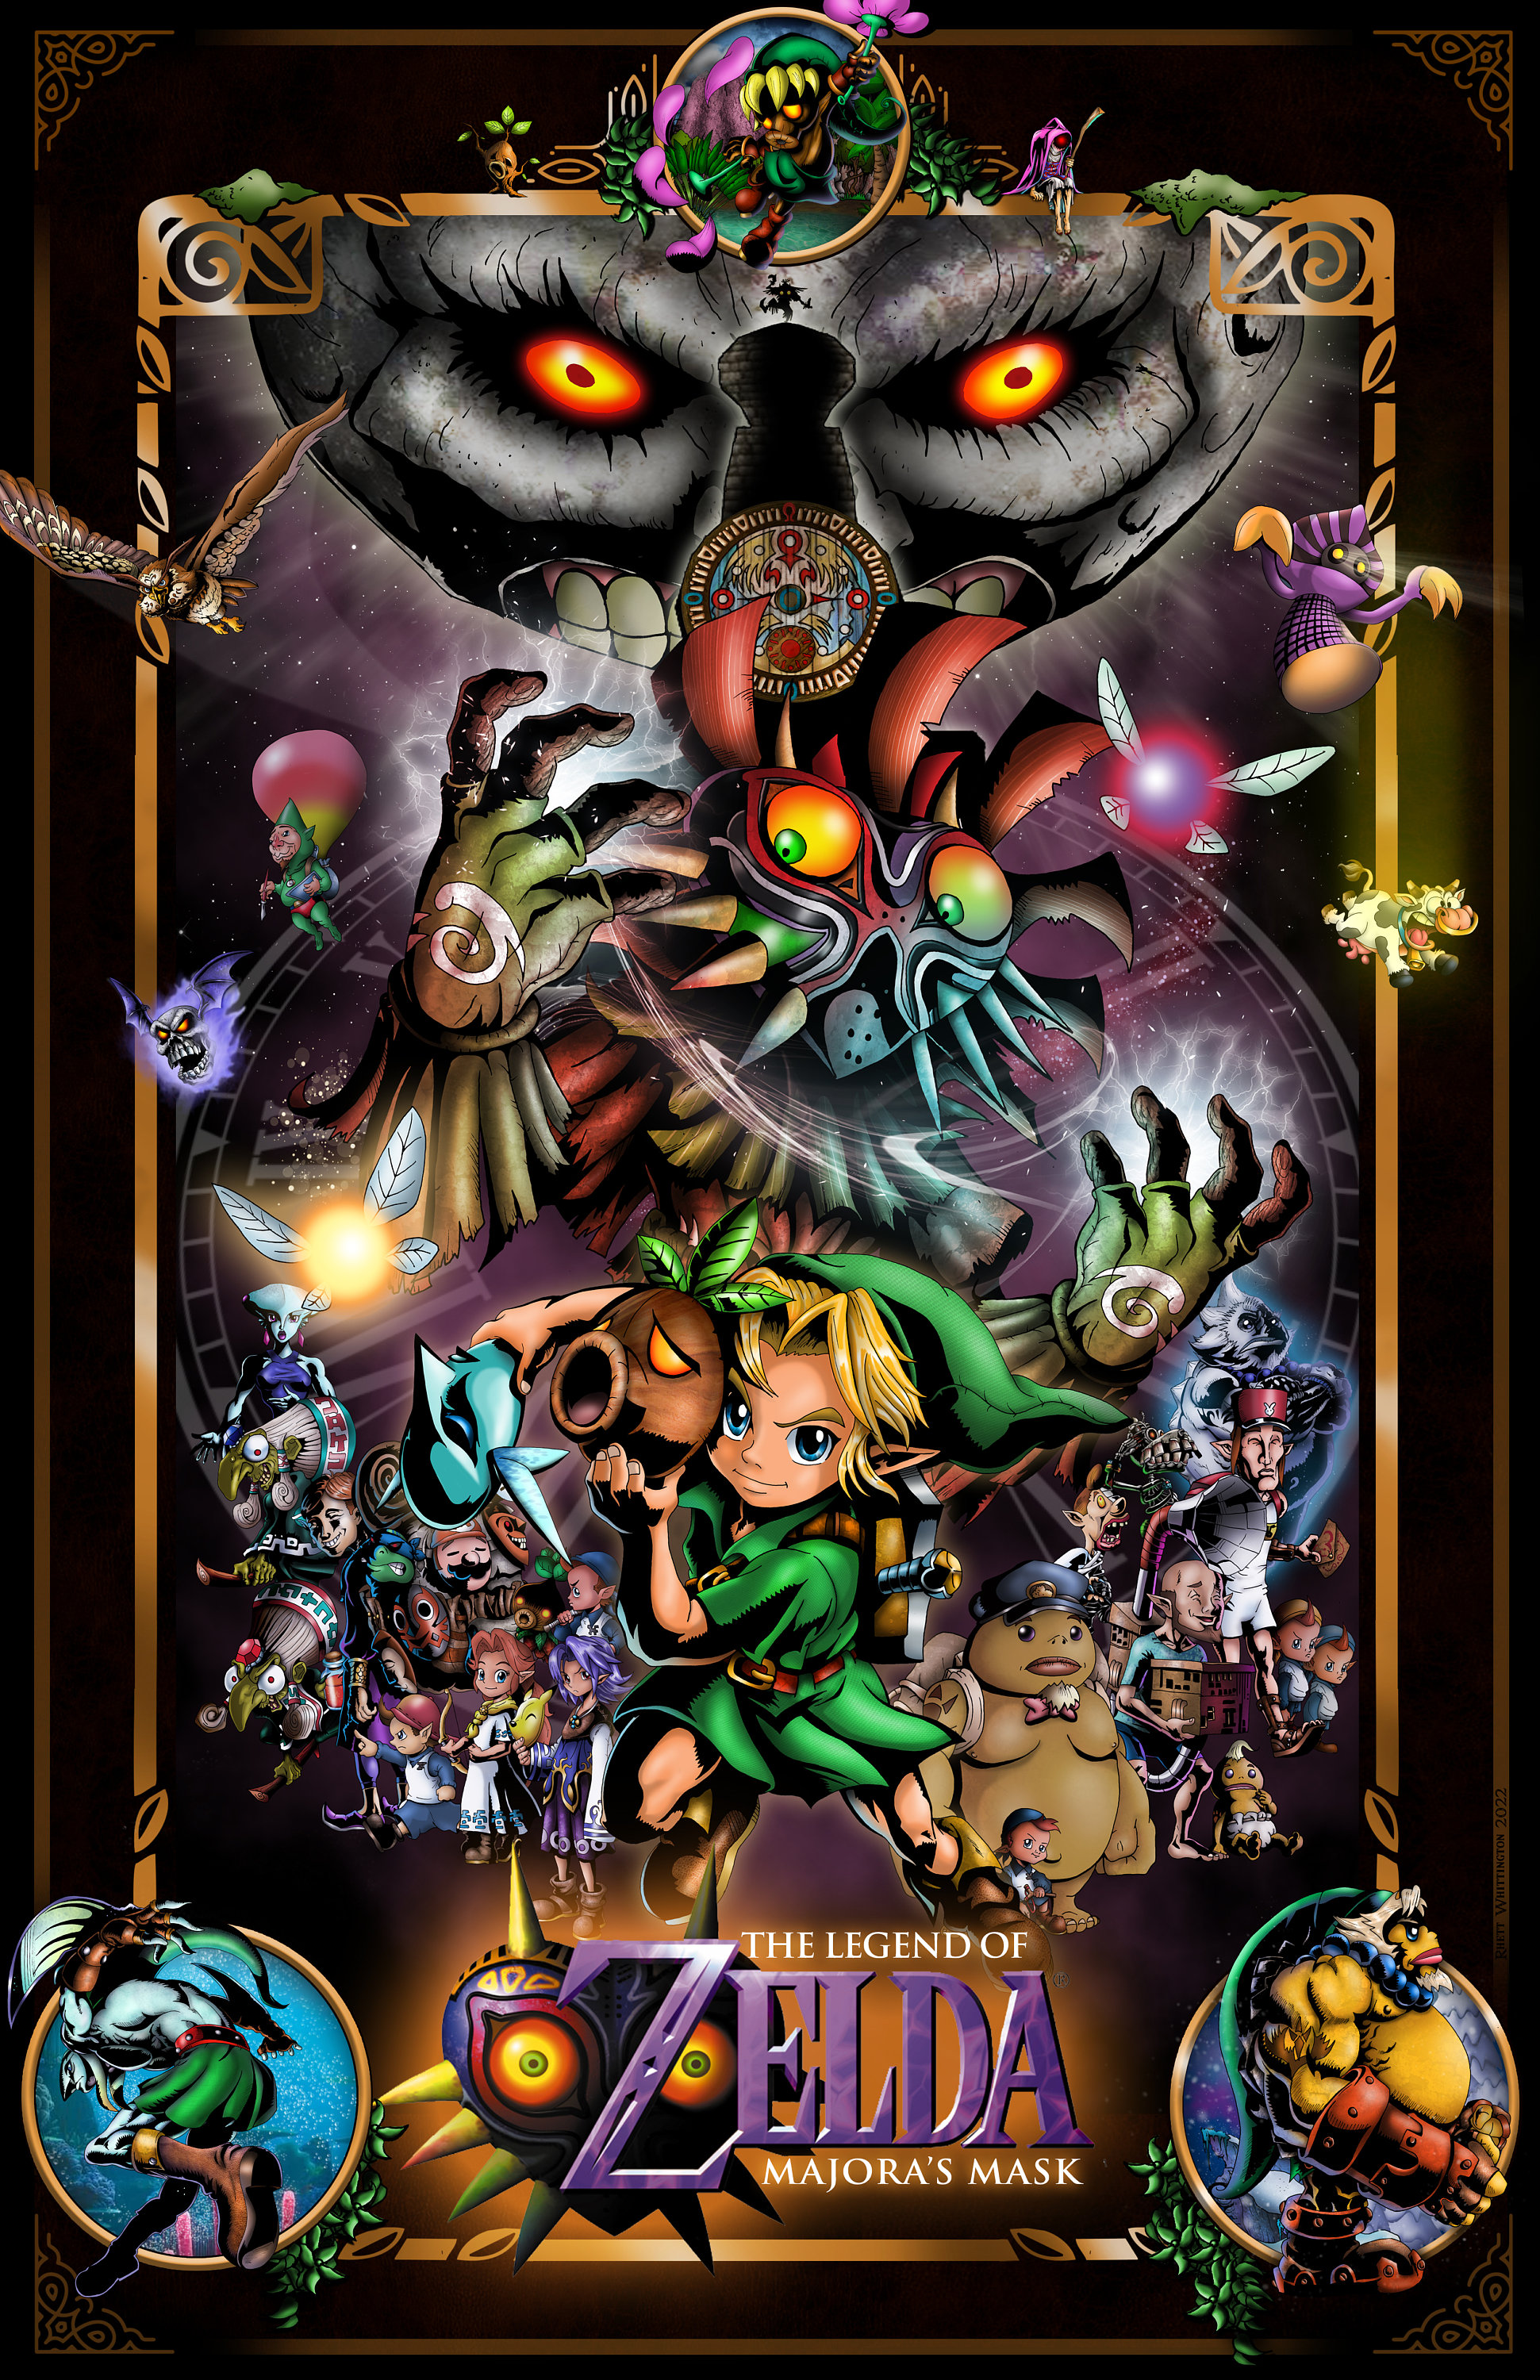 The Legend of Zelda Majora's Mask Large Poster Art Print in multiple sizes